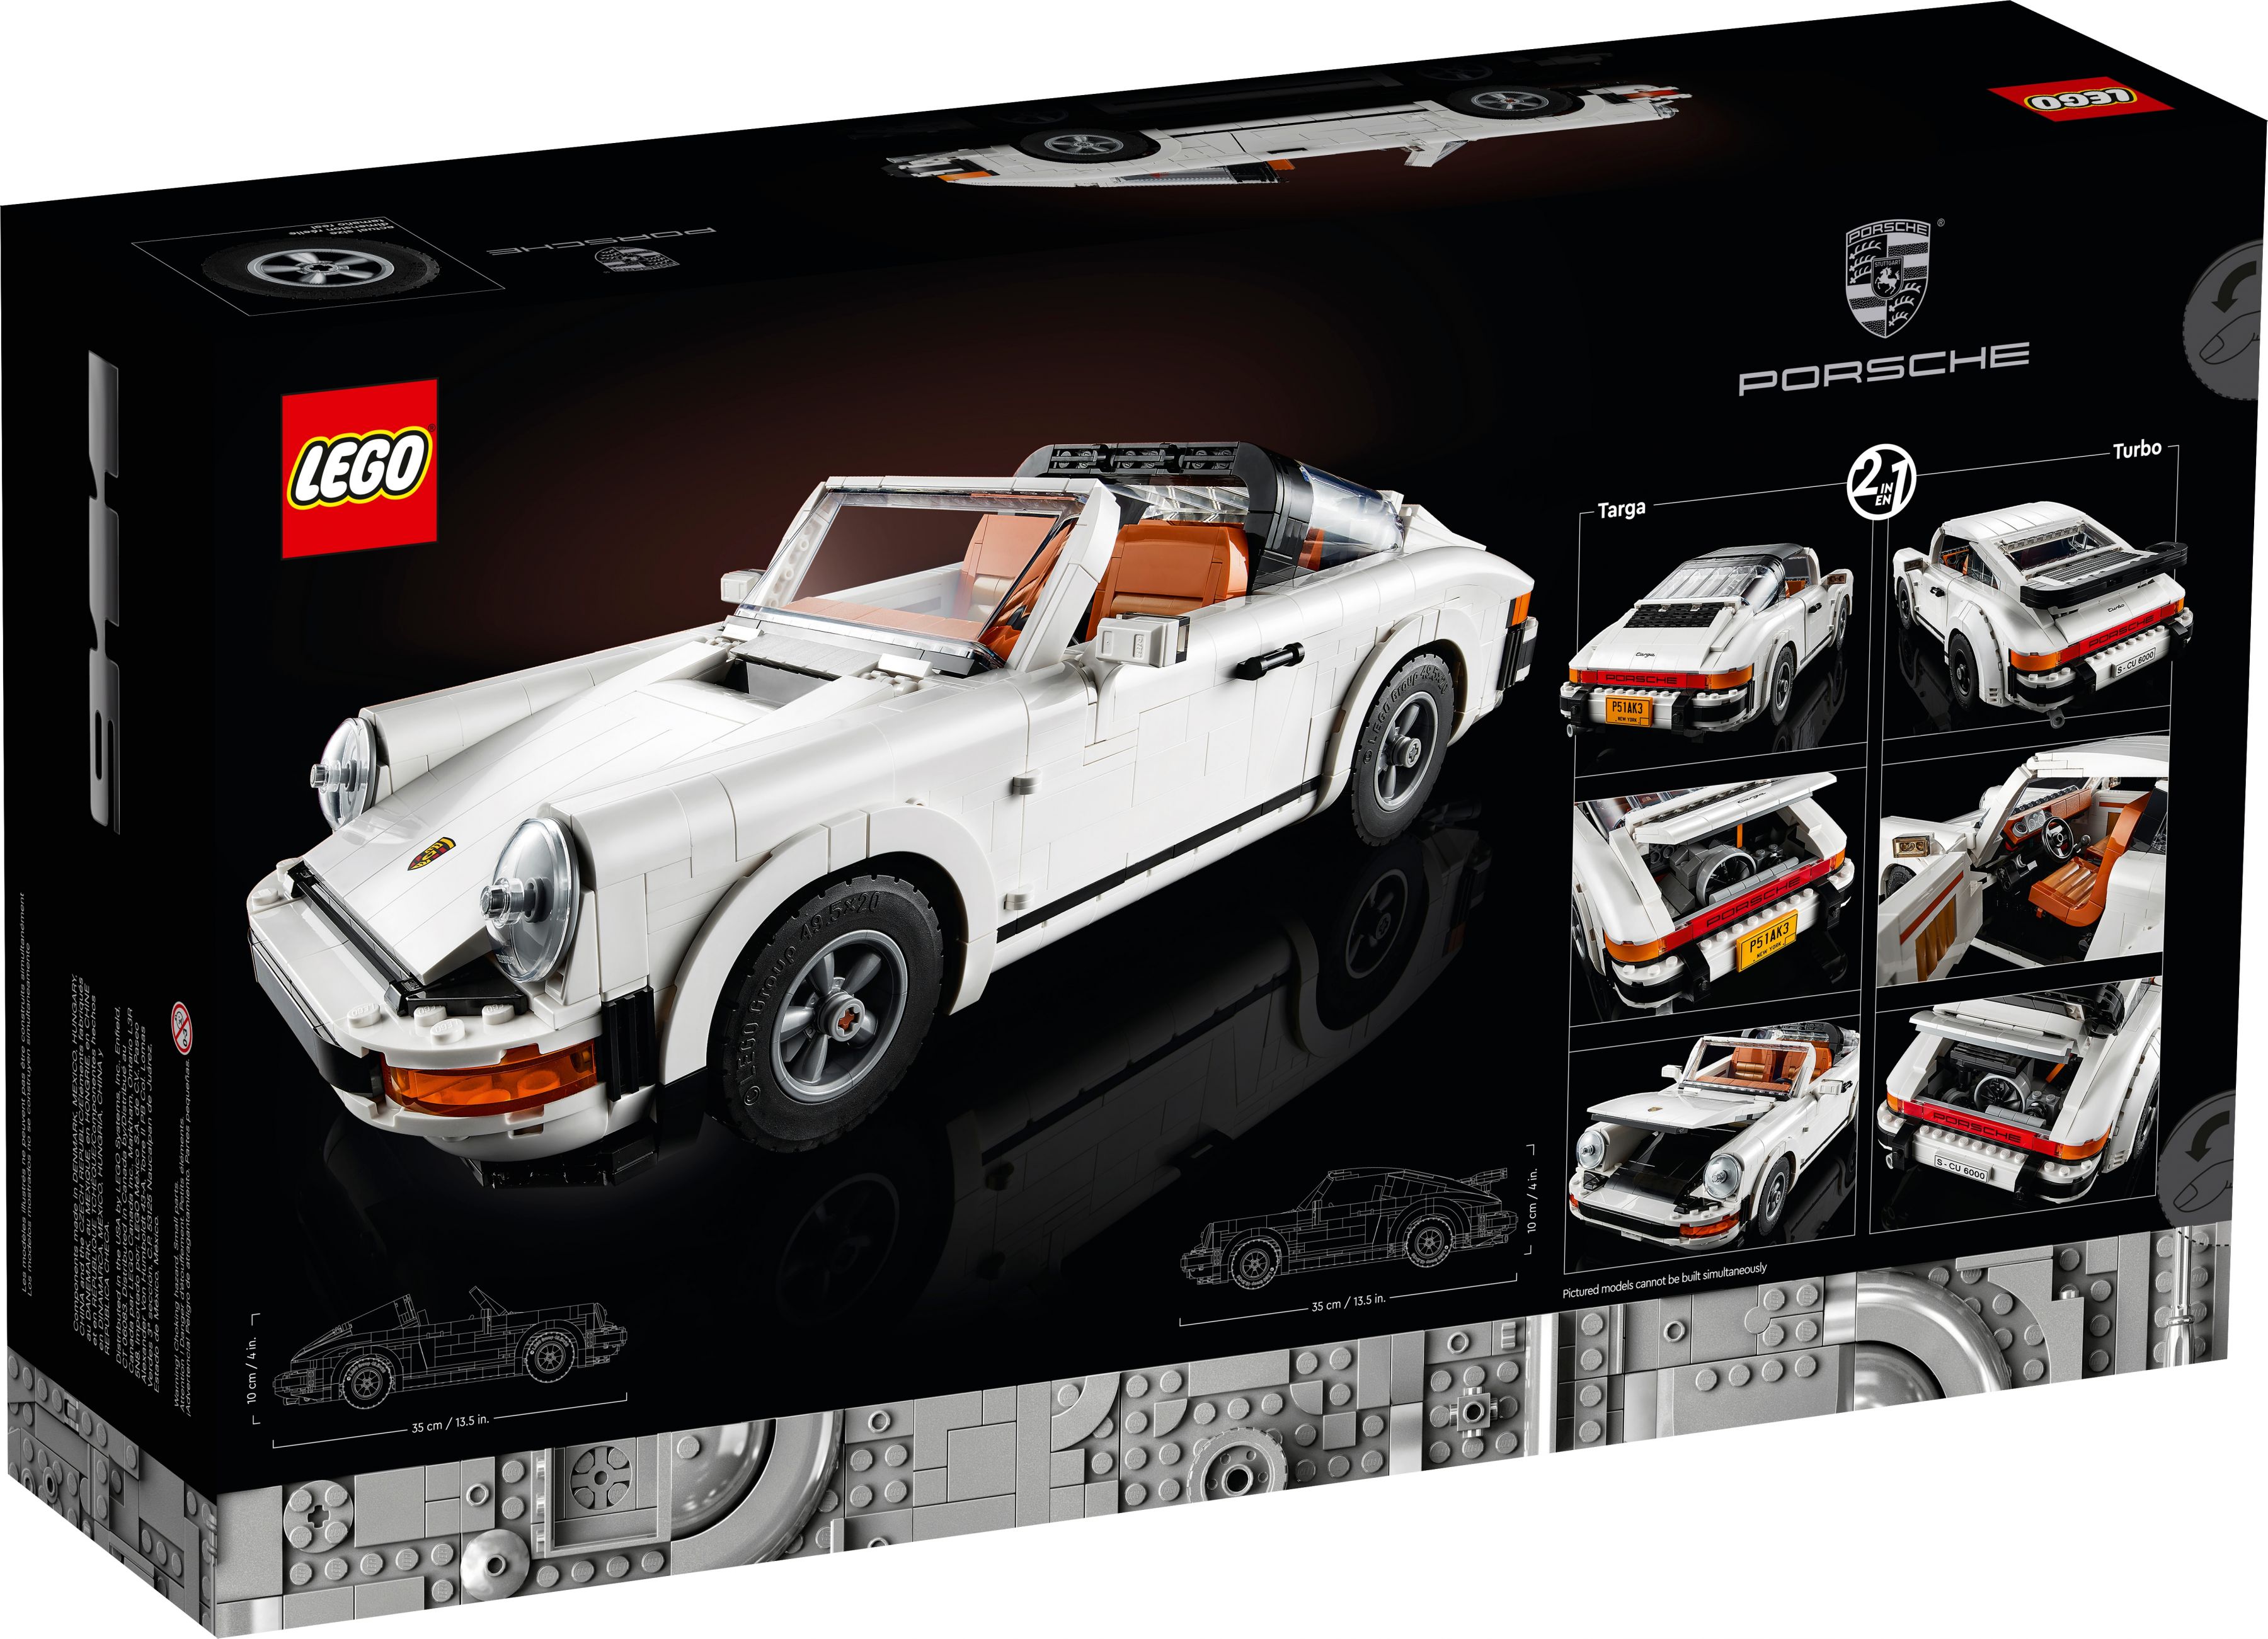 LEGO Advanced Models 10295 Porsche 911 LEGO_10295_box5_v39.jpg